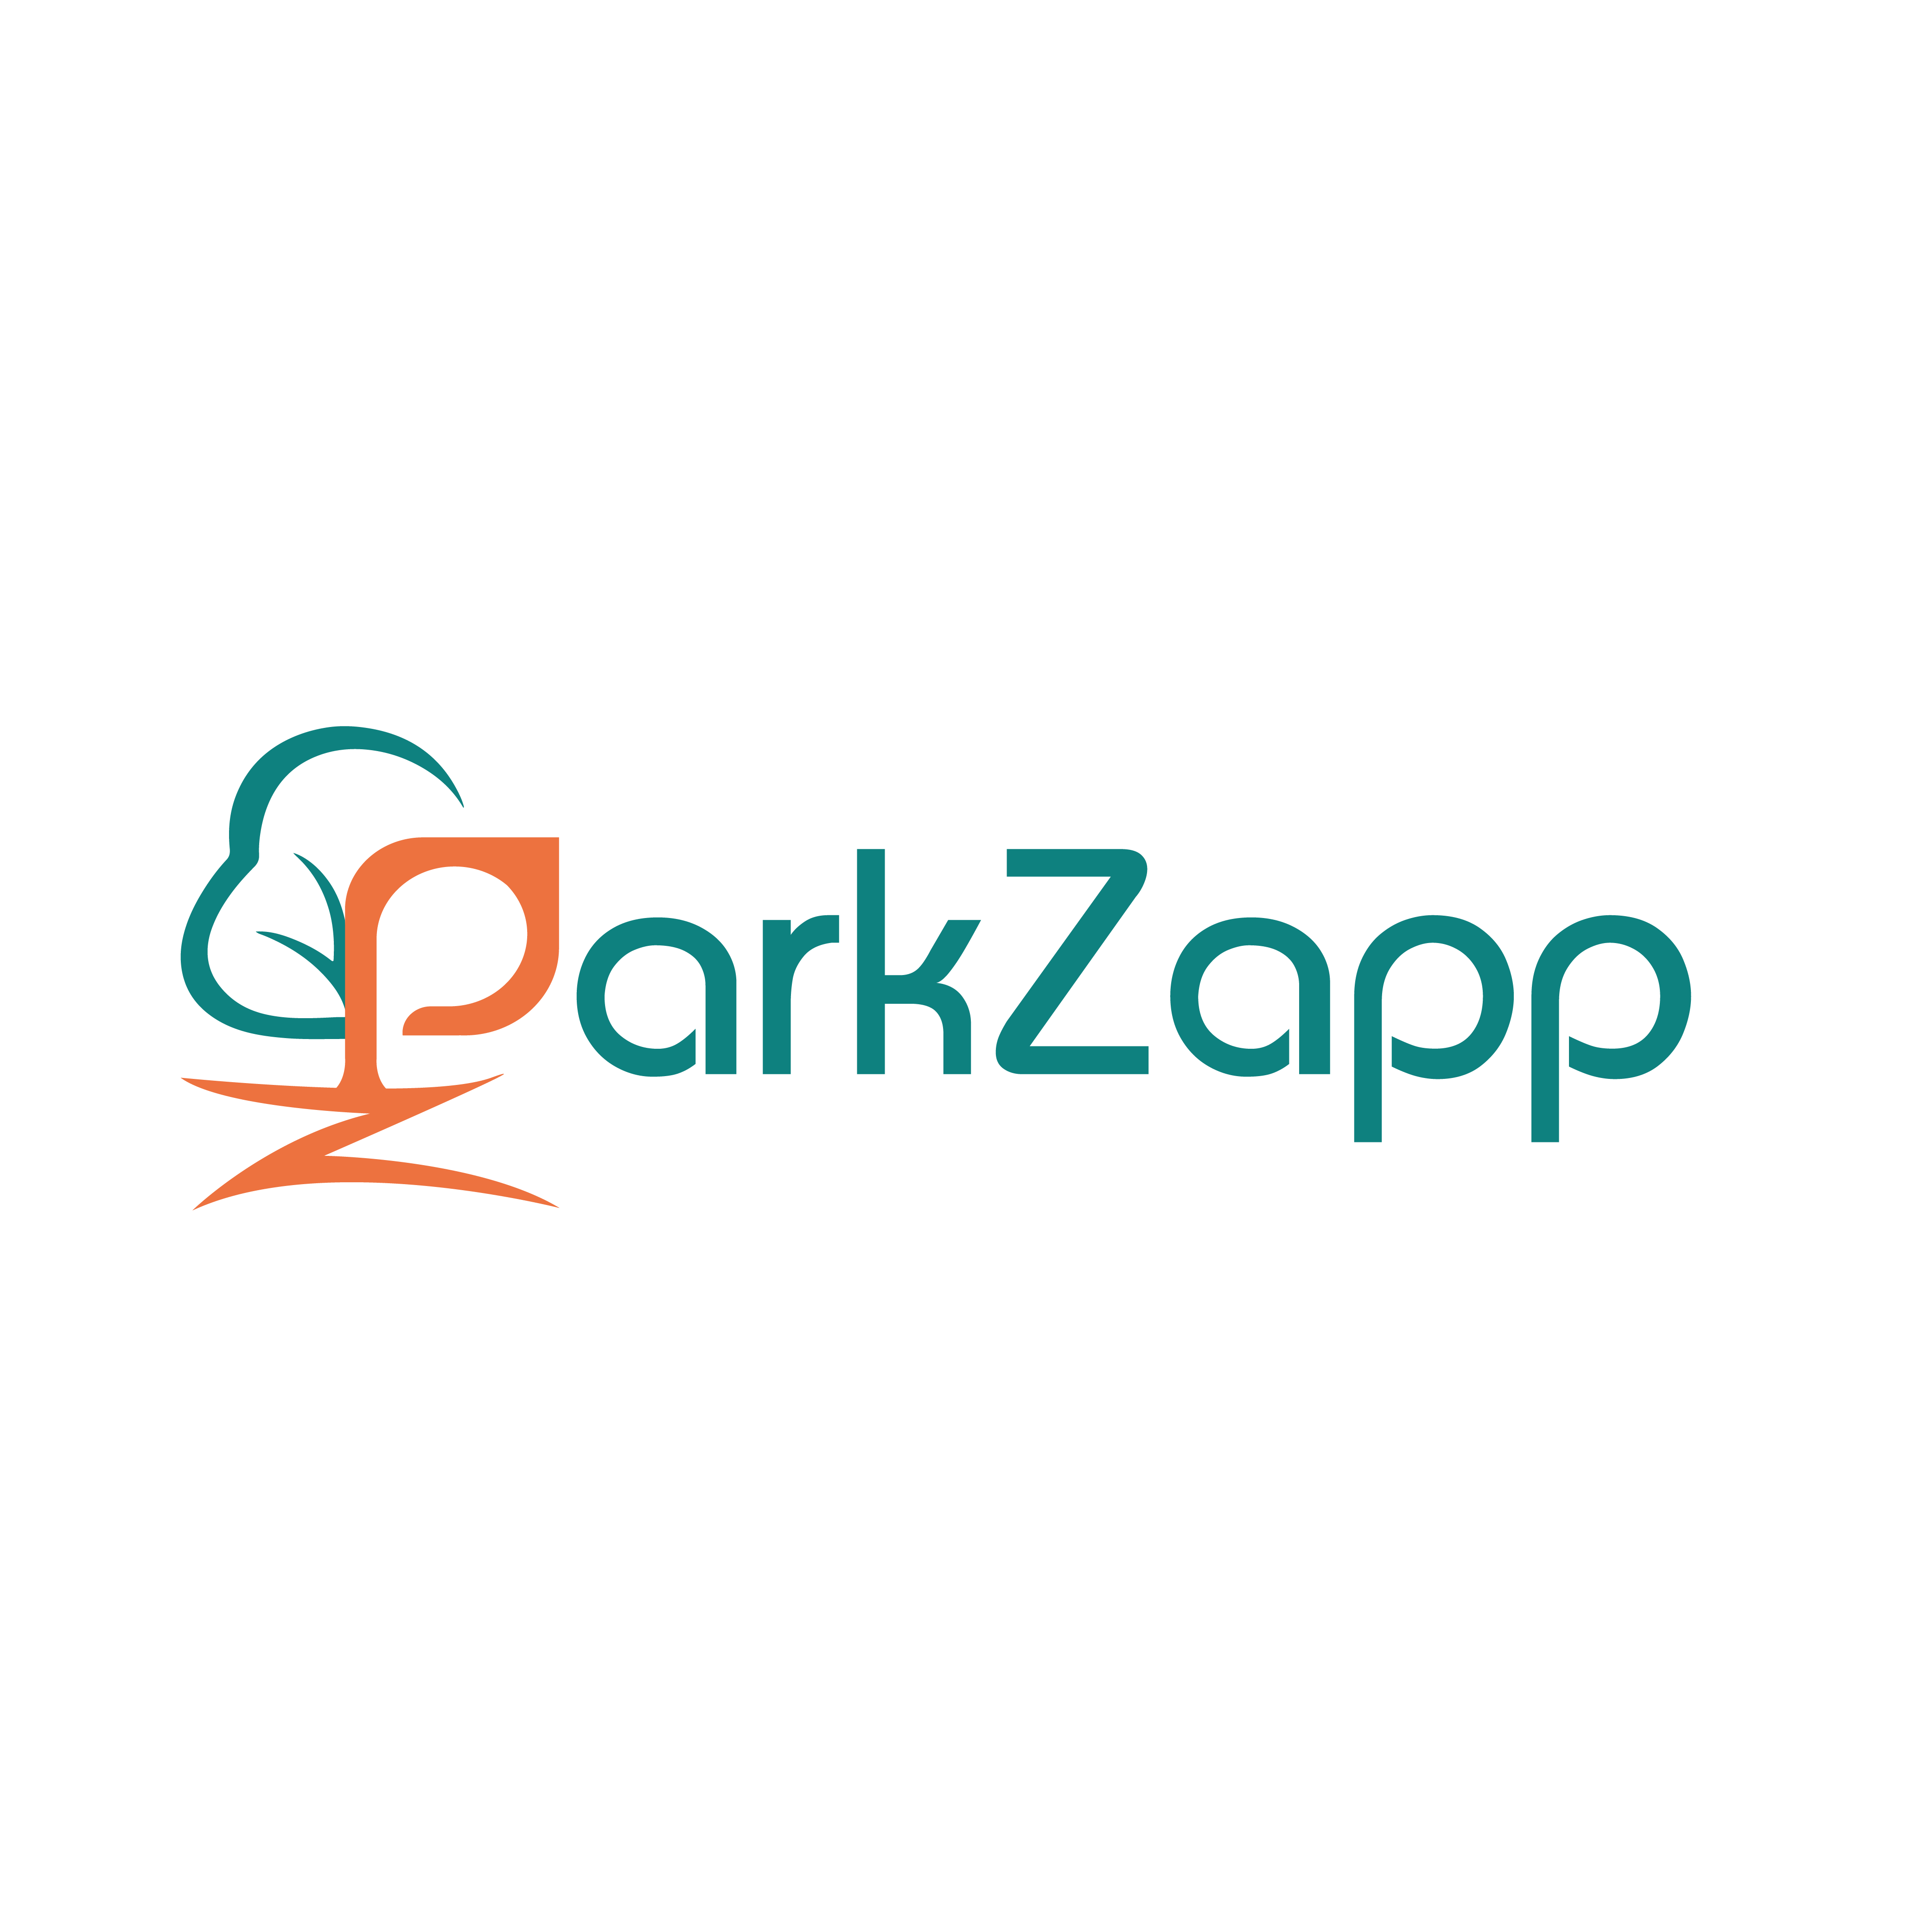 Parkzapp logo-01